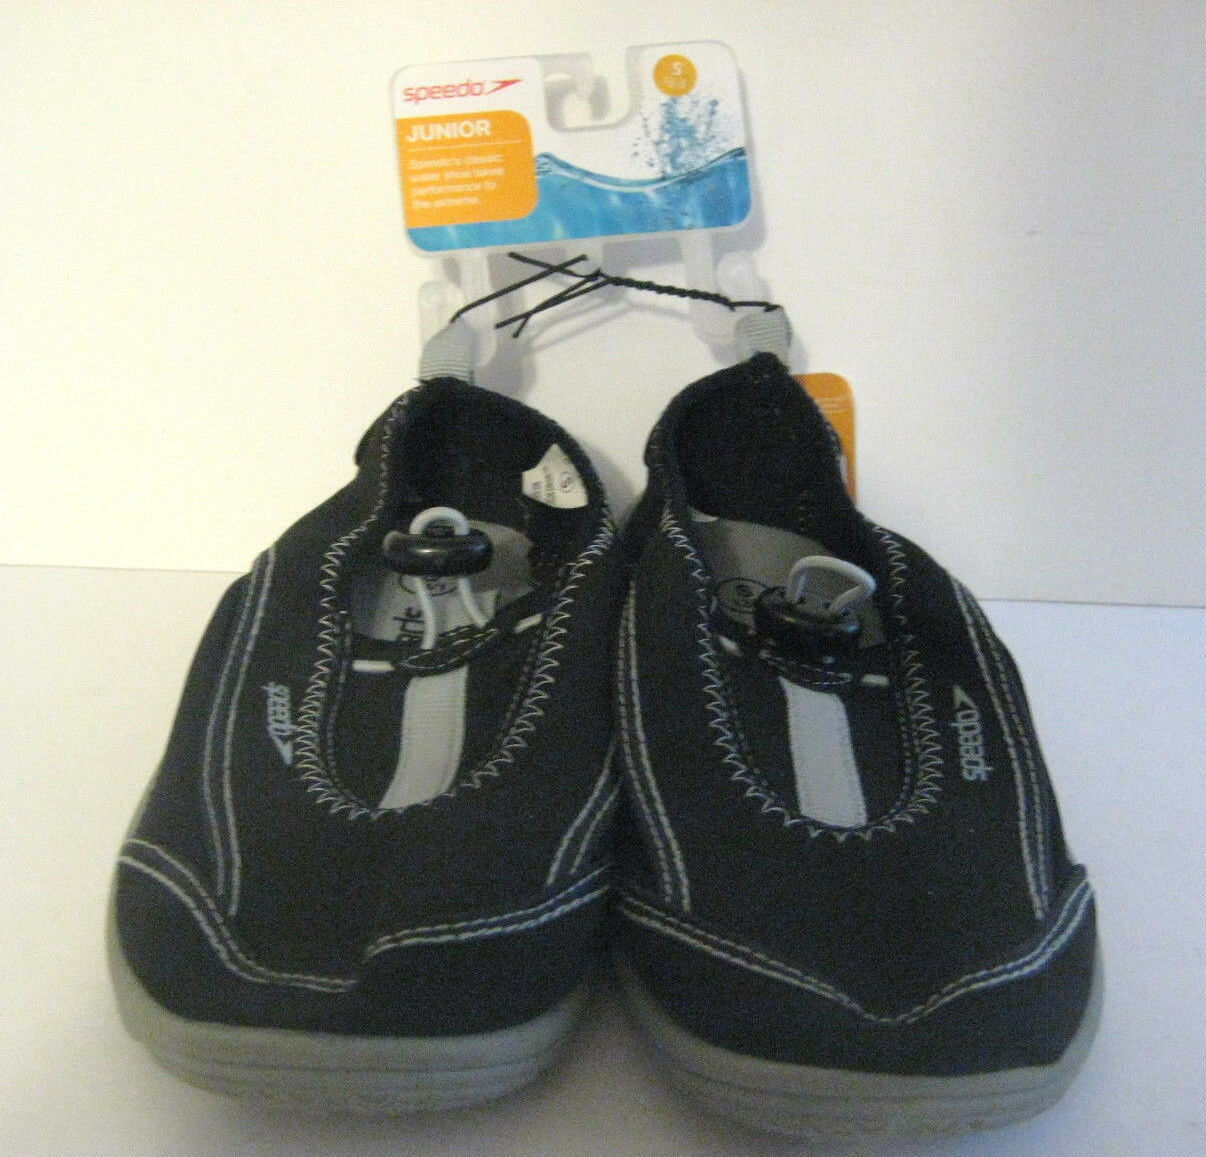 Shoes Speedo Water Junior Size Small 13 1 S Boys Girls Unisex Black Grey Gray